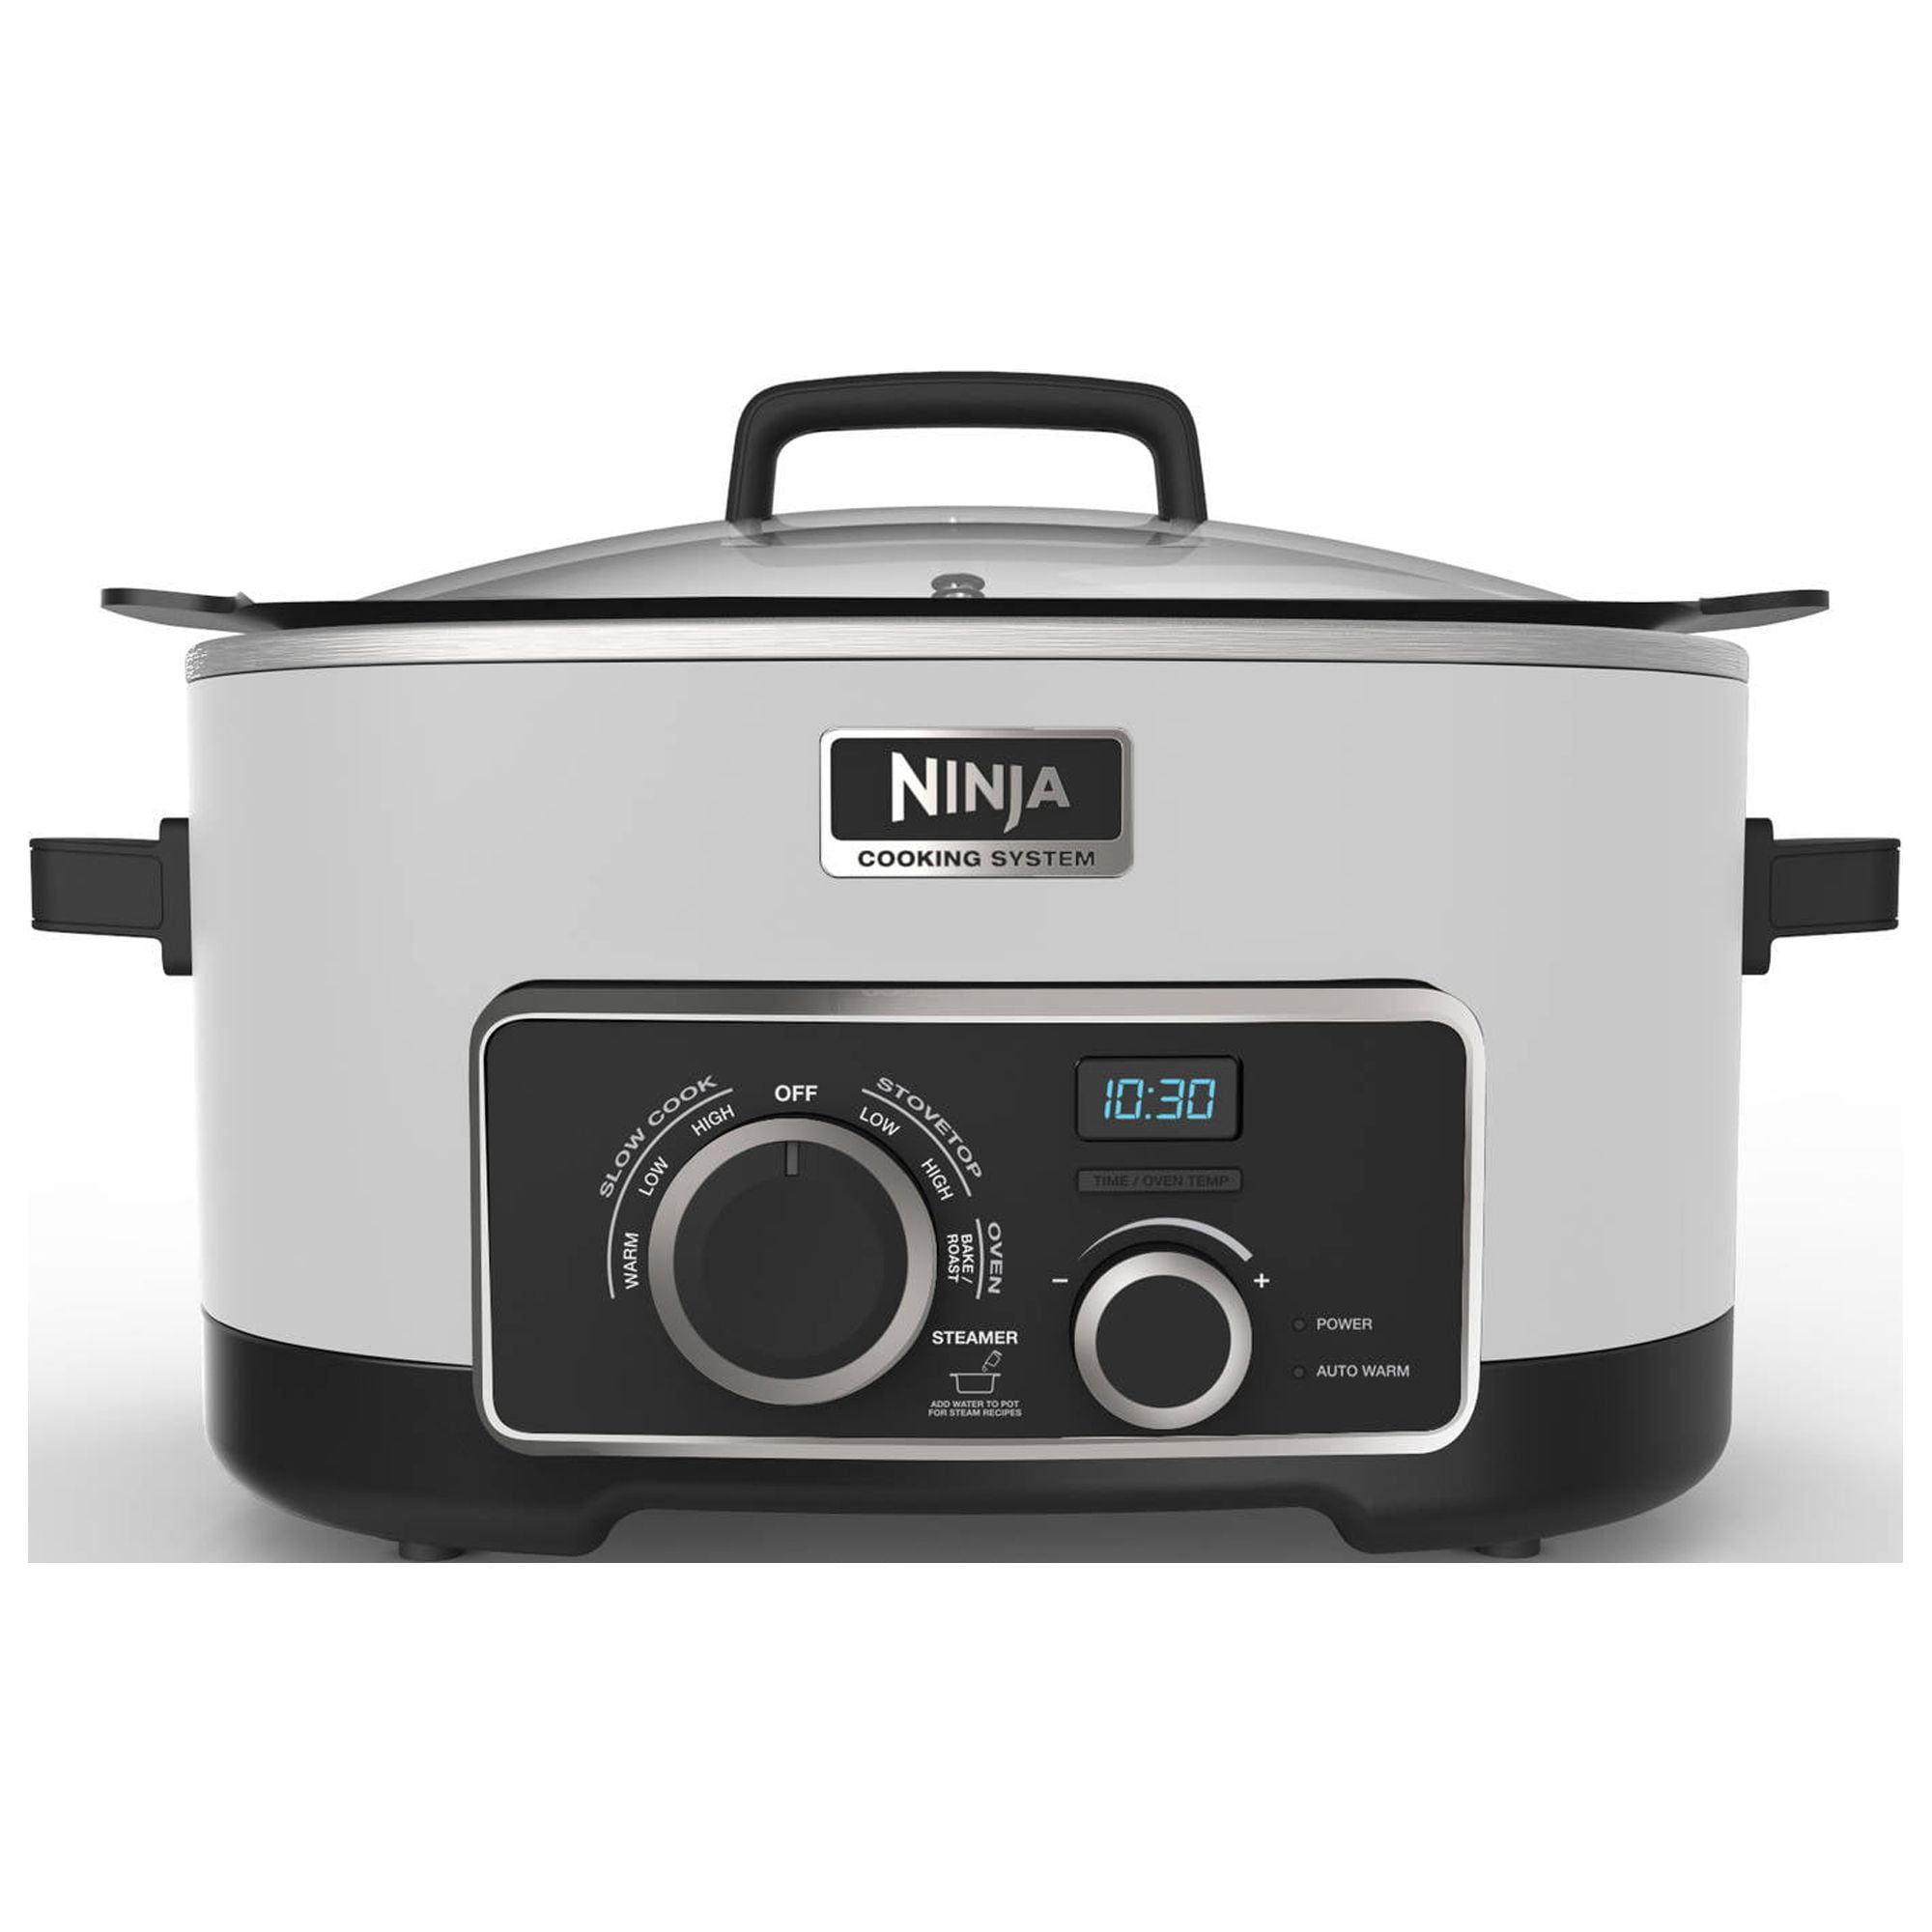 Ninja 4-in-1 Accutemp Cooking System w/ Auto-iQ & Recipe Book 